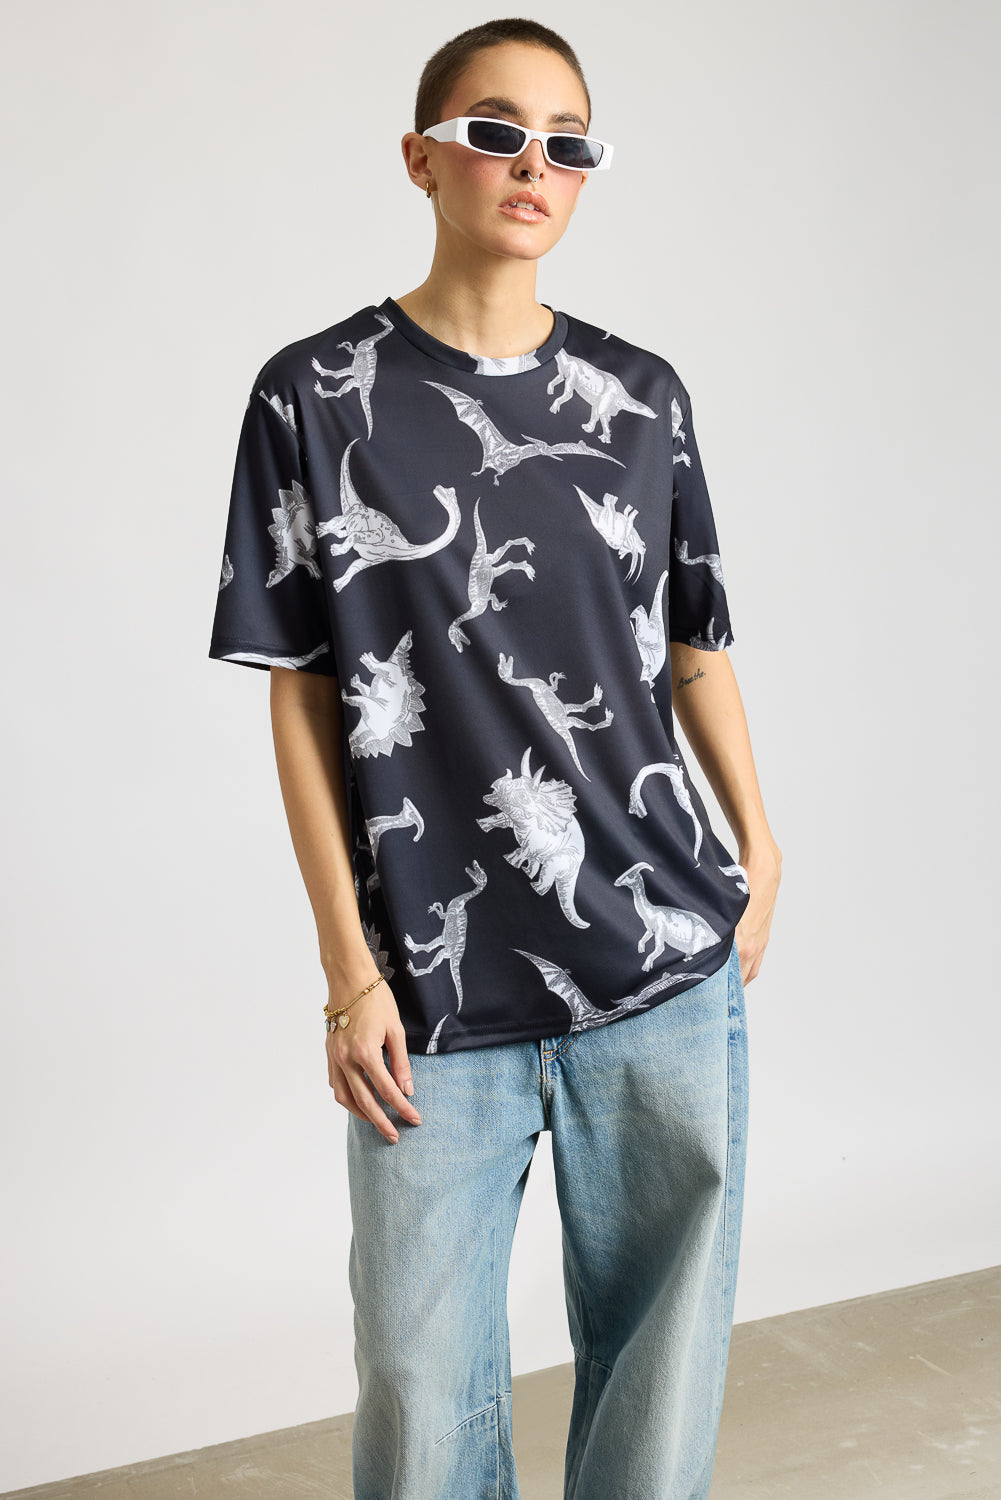 Printed Women's T-Shirt - Dinosaurs